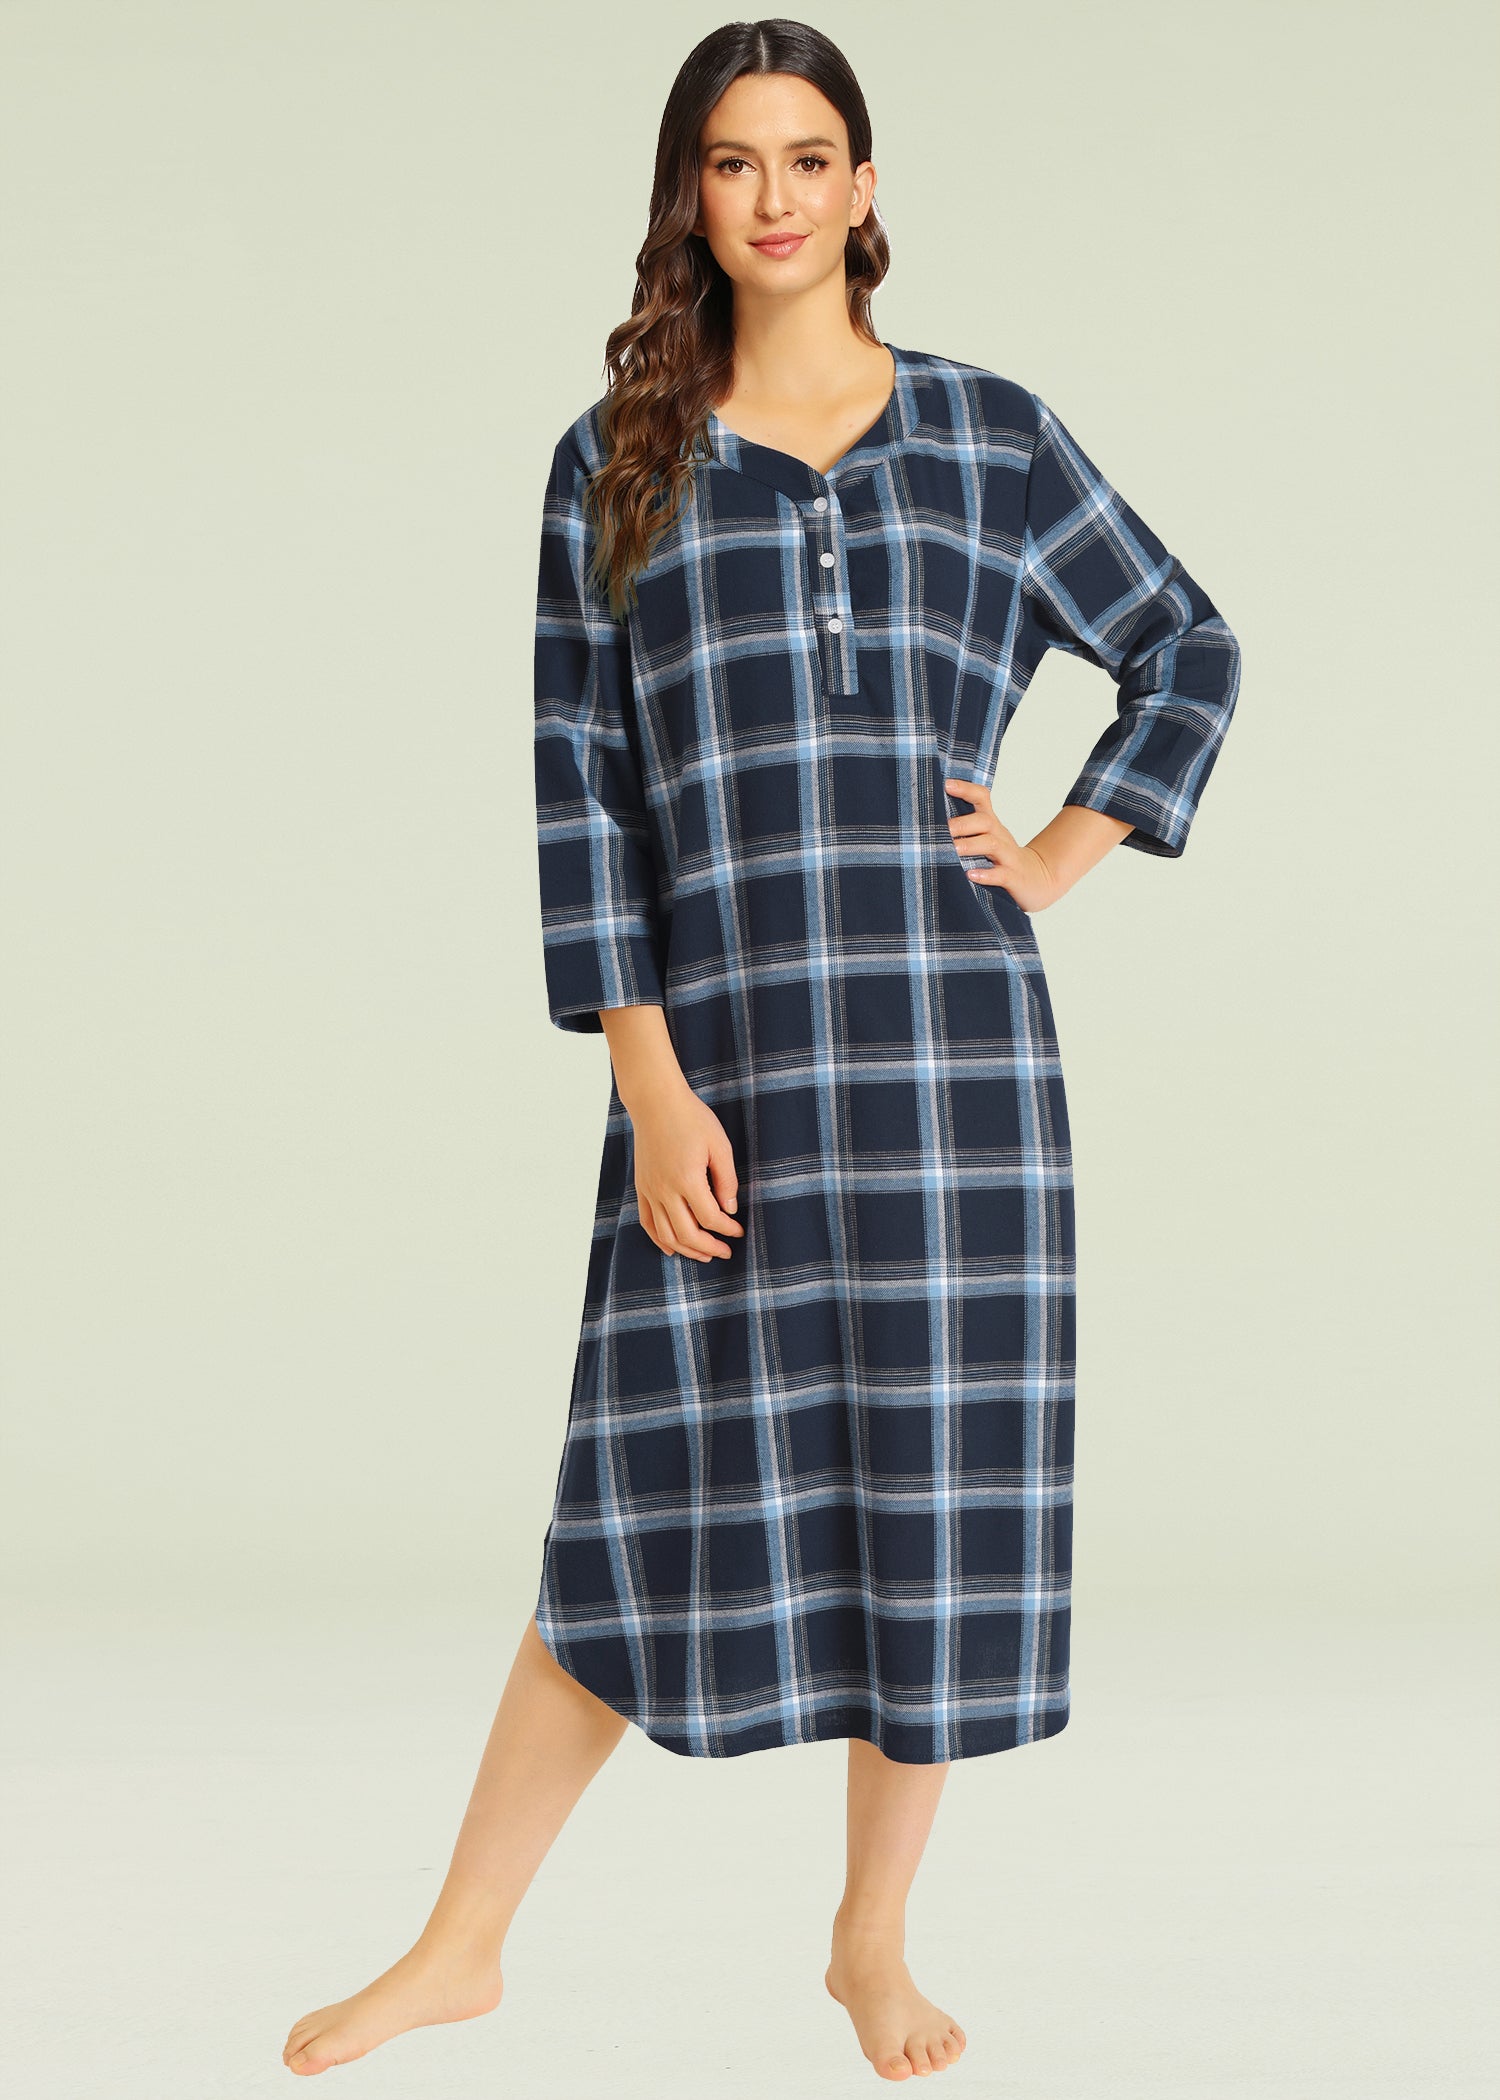 Winter 100% Brushed cotton nightshirts women nightgowns sleepwear casual  plaid Plus size sleepdress night dress nightwear